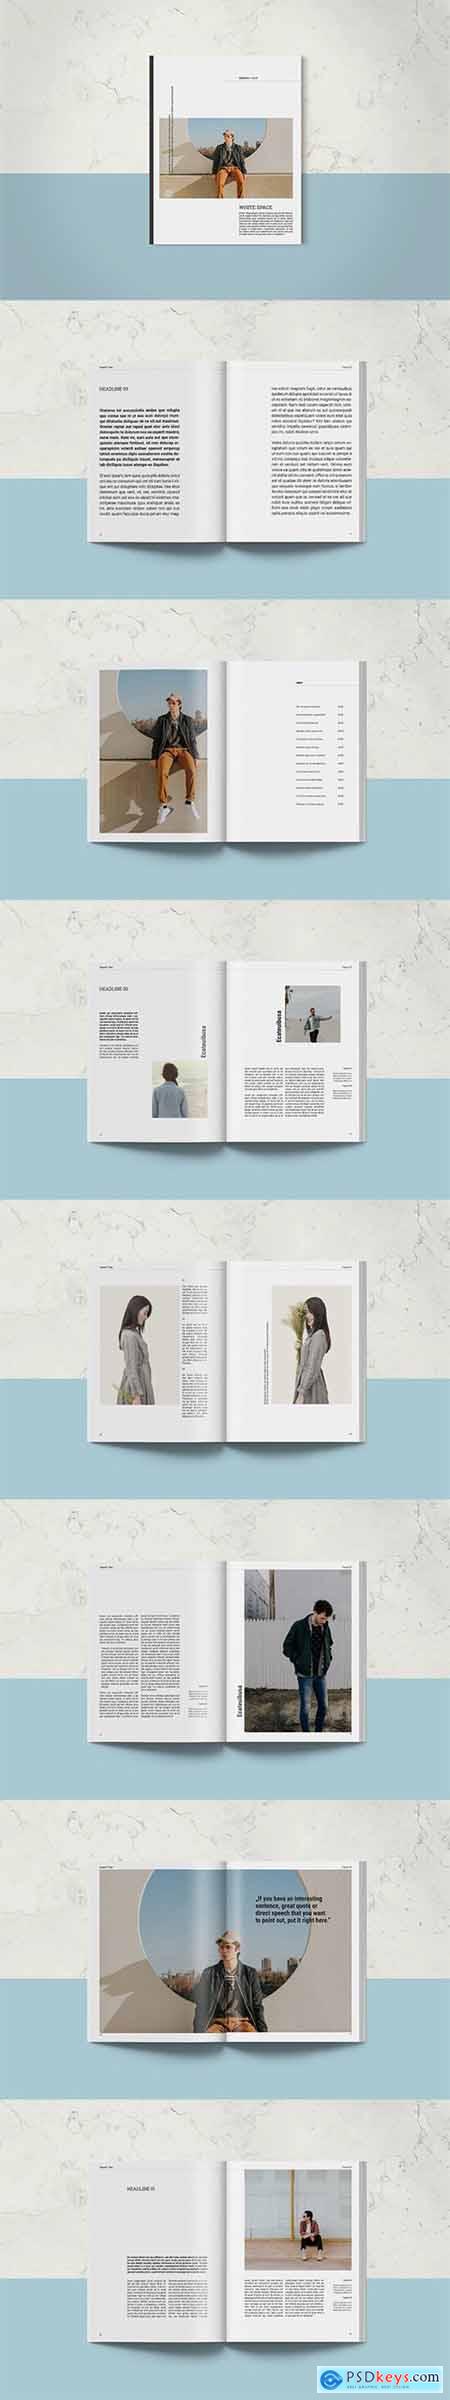 Magazine Template - White Space